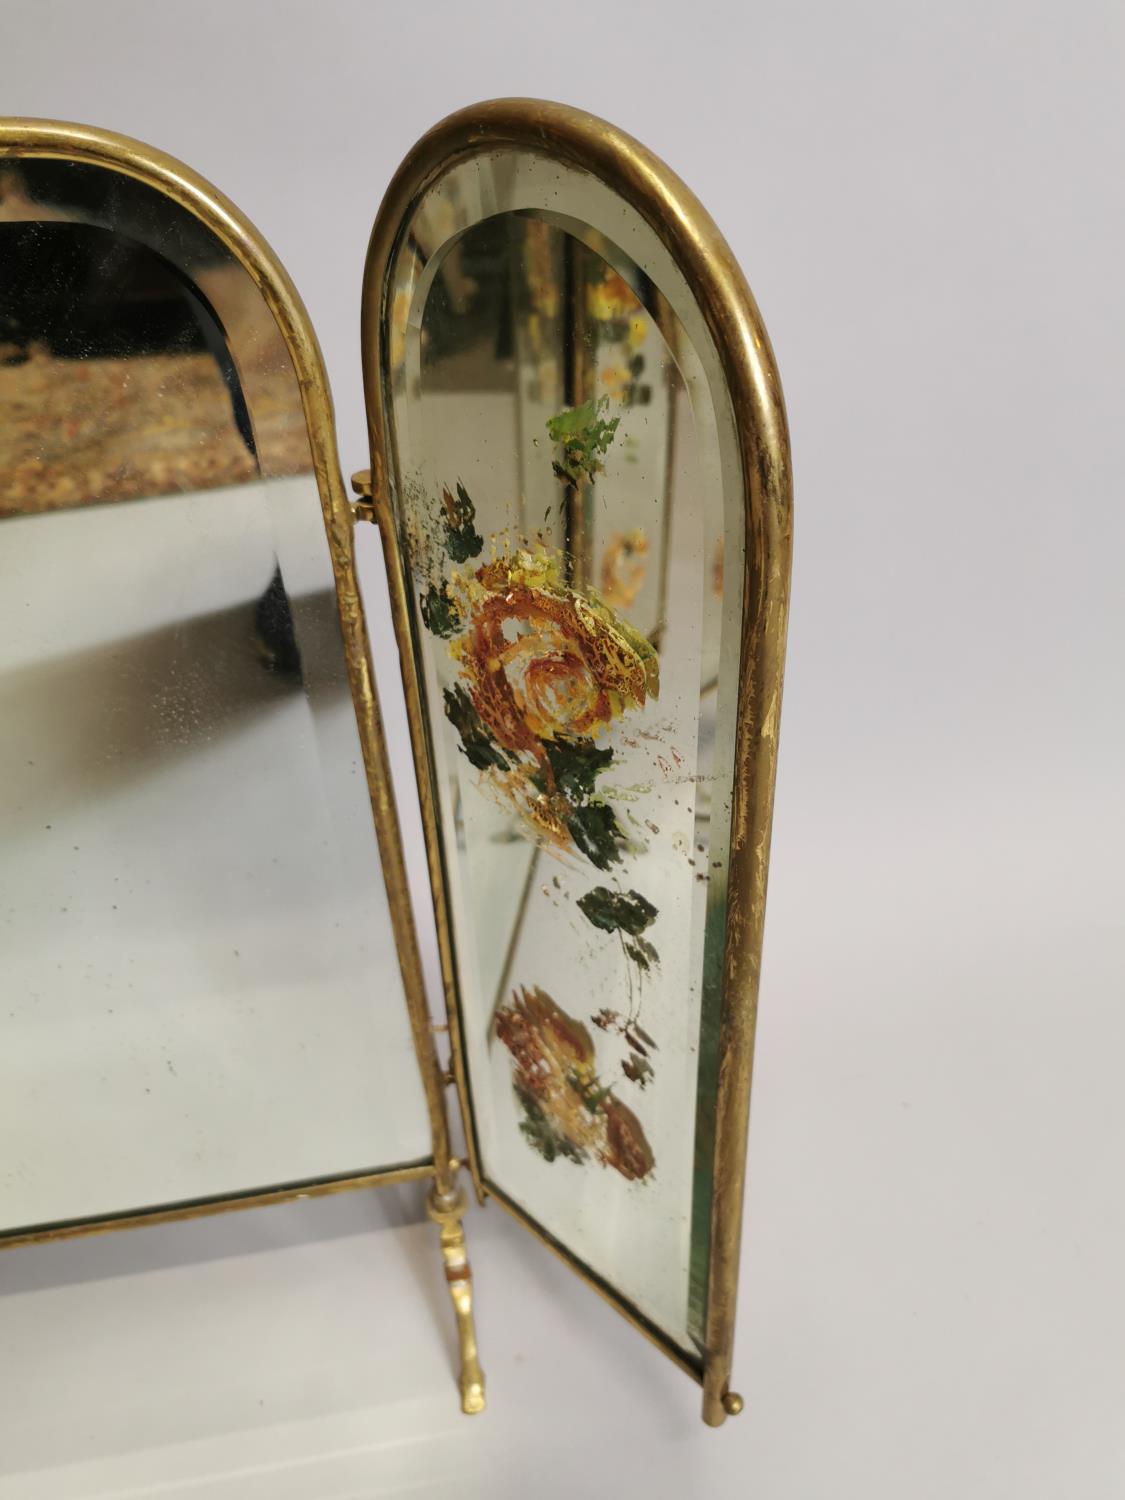 Edwardian mirrored brass fire screen - Image 4 of 5